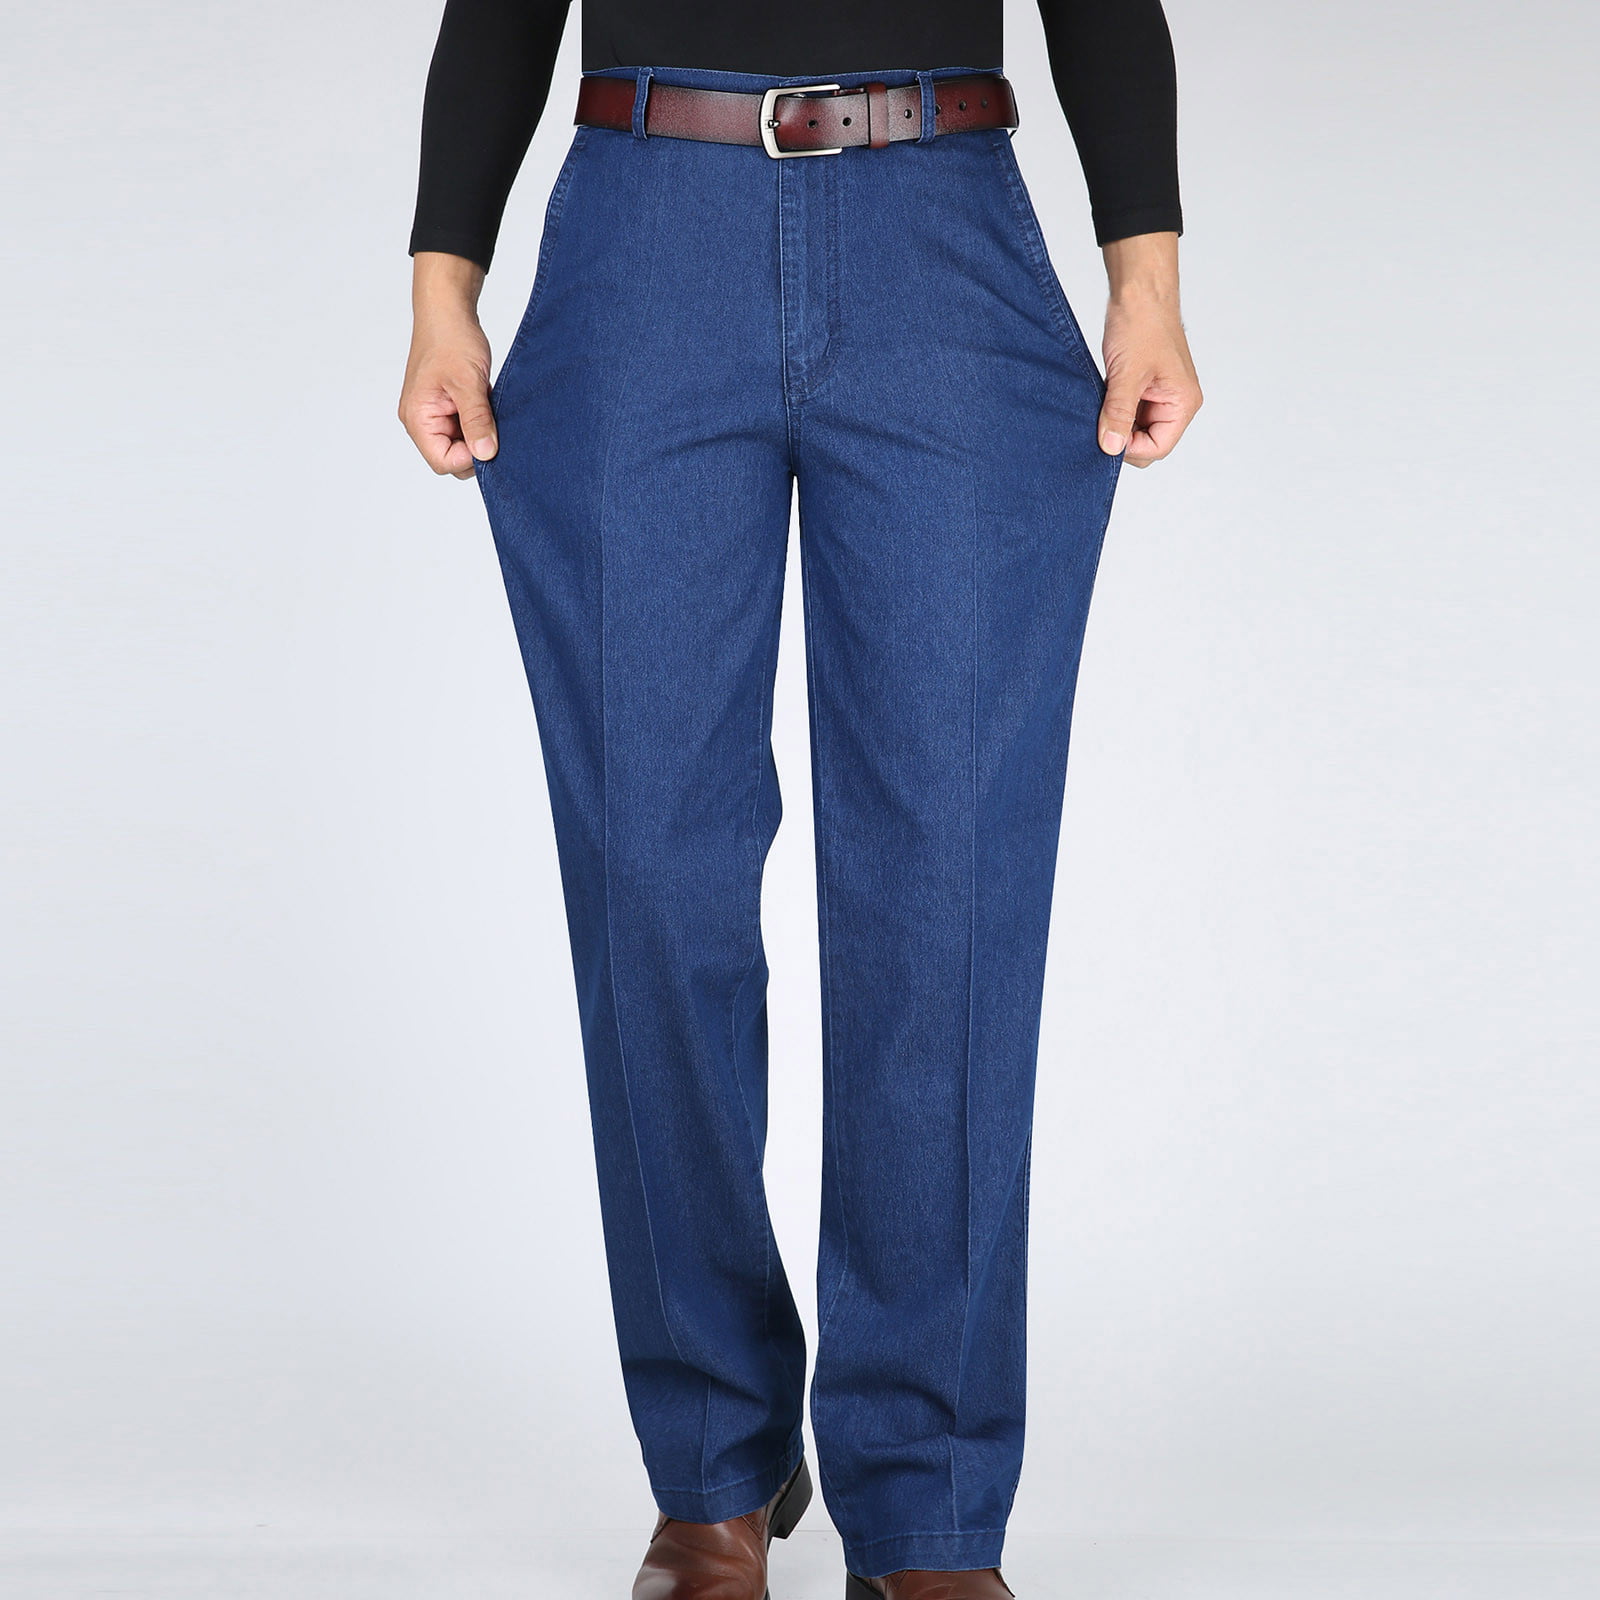 Women's Plus Size Solid High Waist Stretch Cropped Skinny Pants 3XL(18) -  Walmart.com